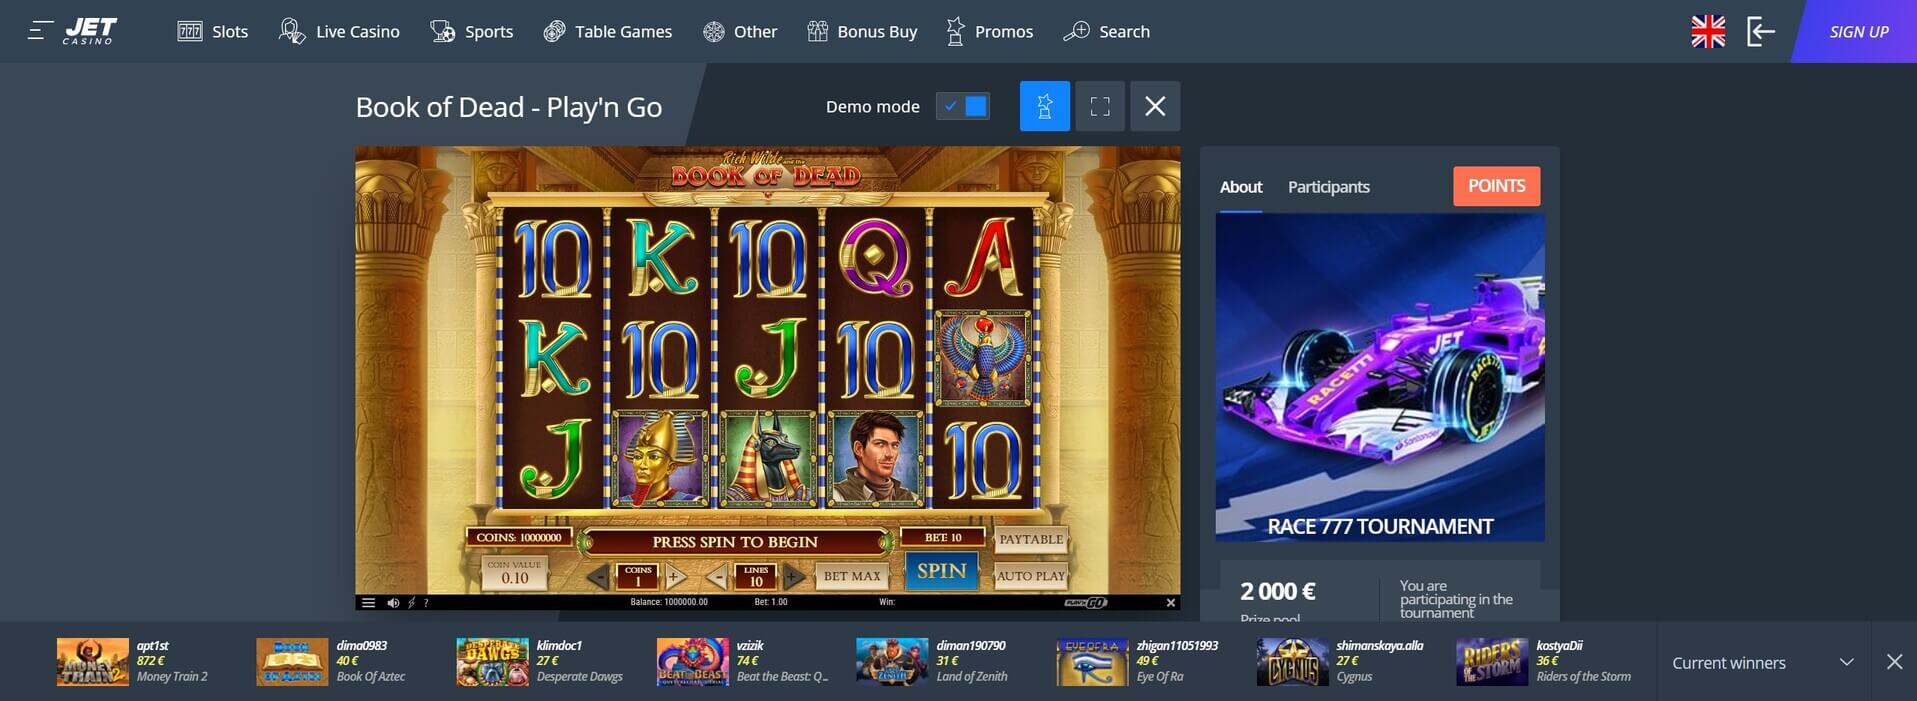 casino online paraguay